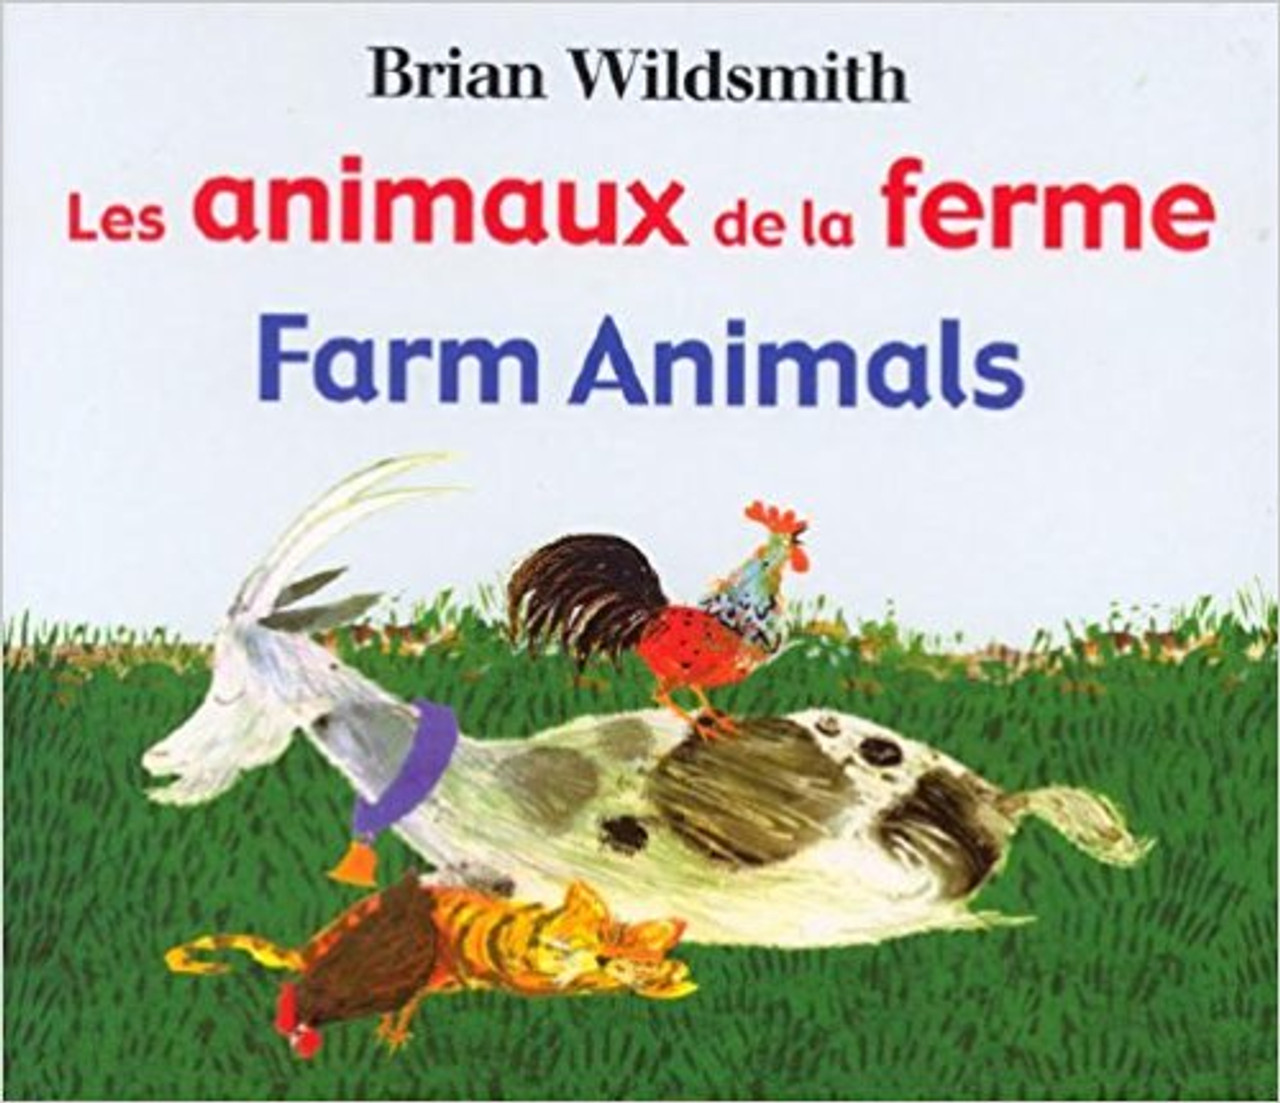 Les Animaux de la Ferme/Farm Animals by Brian Wildsmith